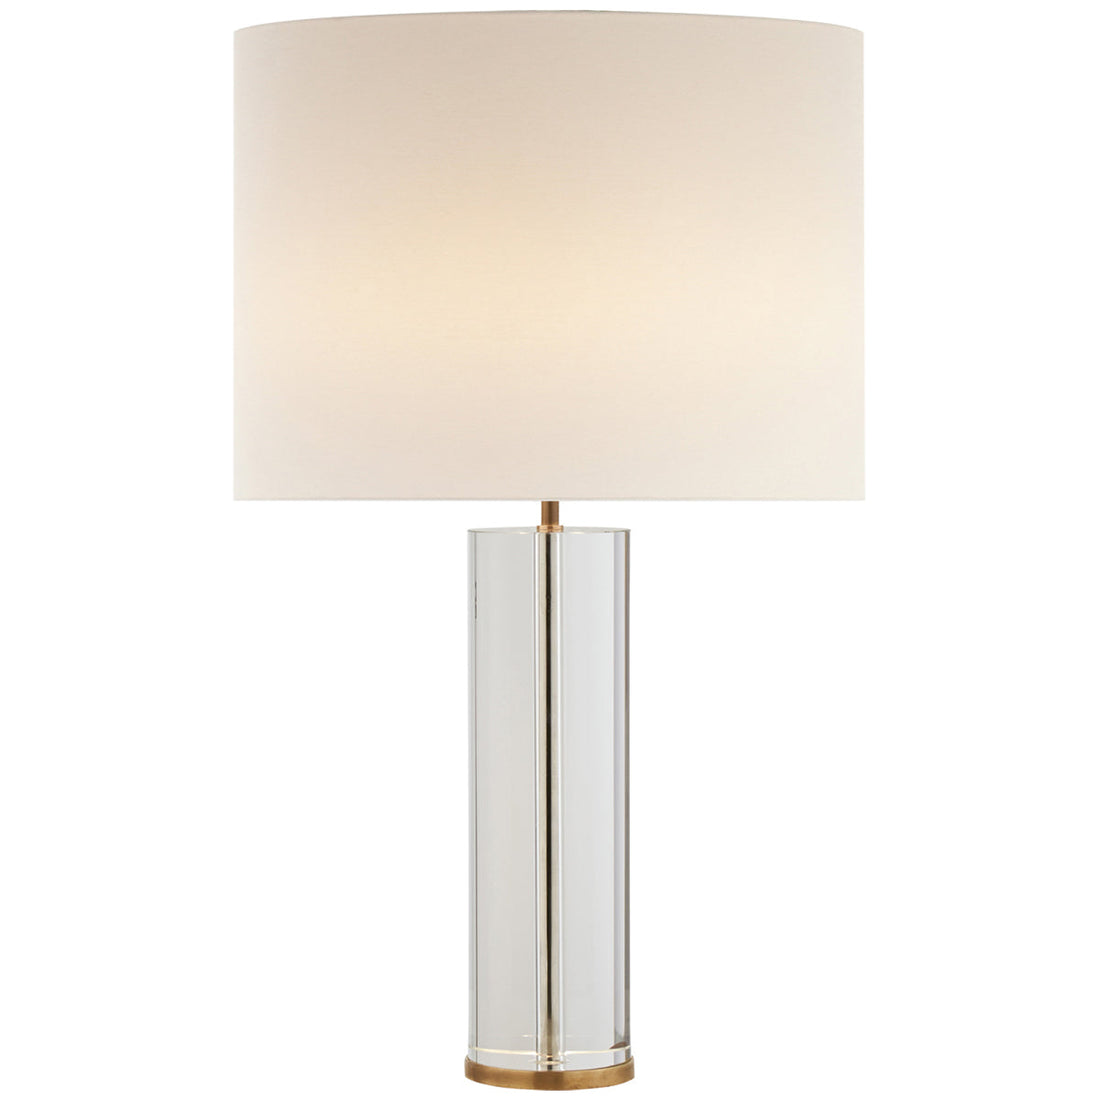 Visual Comfort Lineham Table Lamp in Crystal